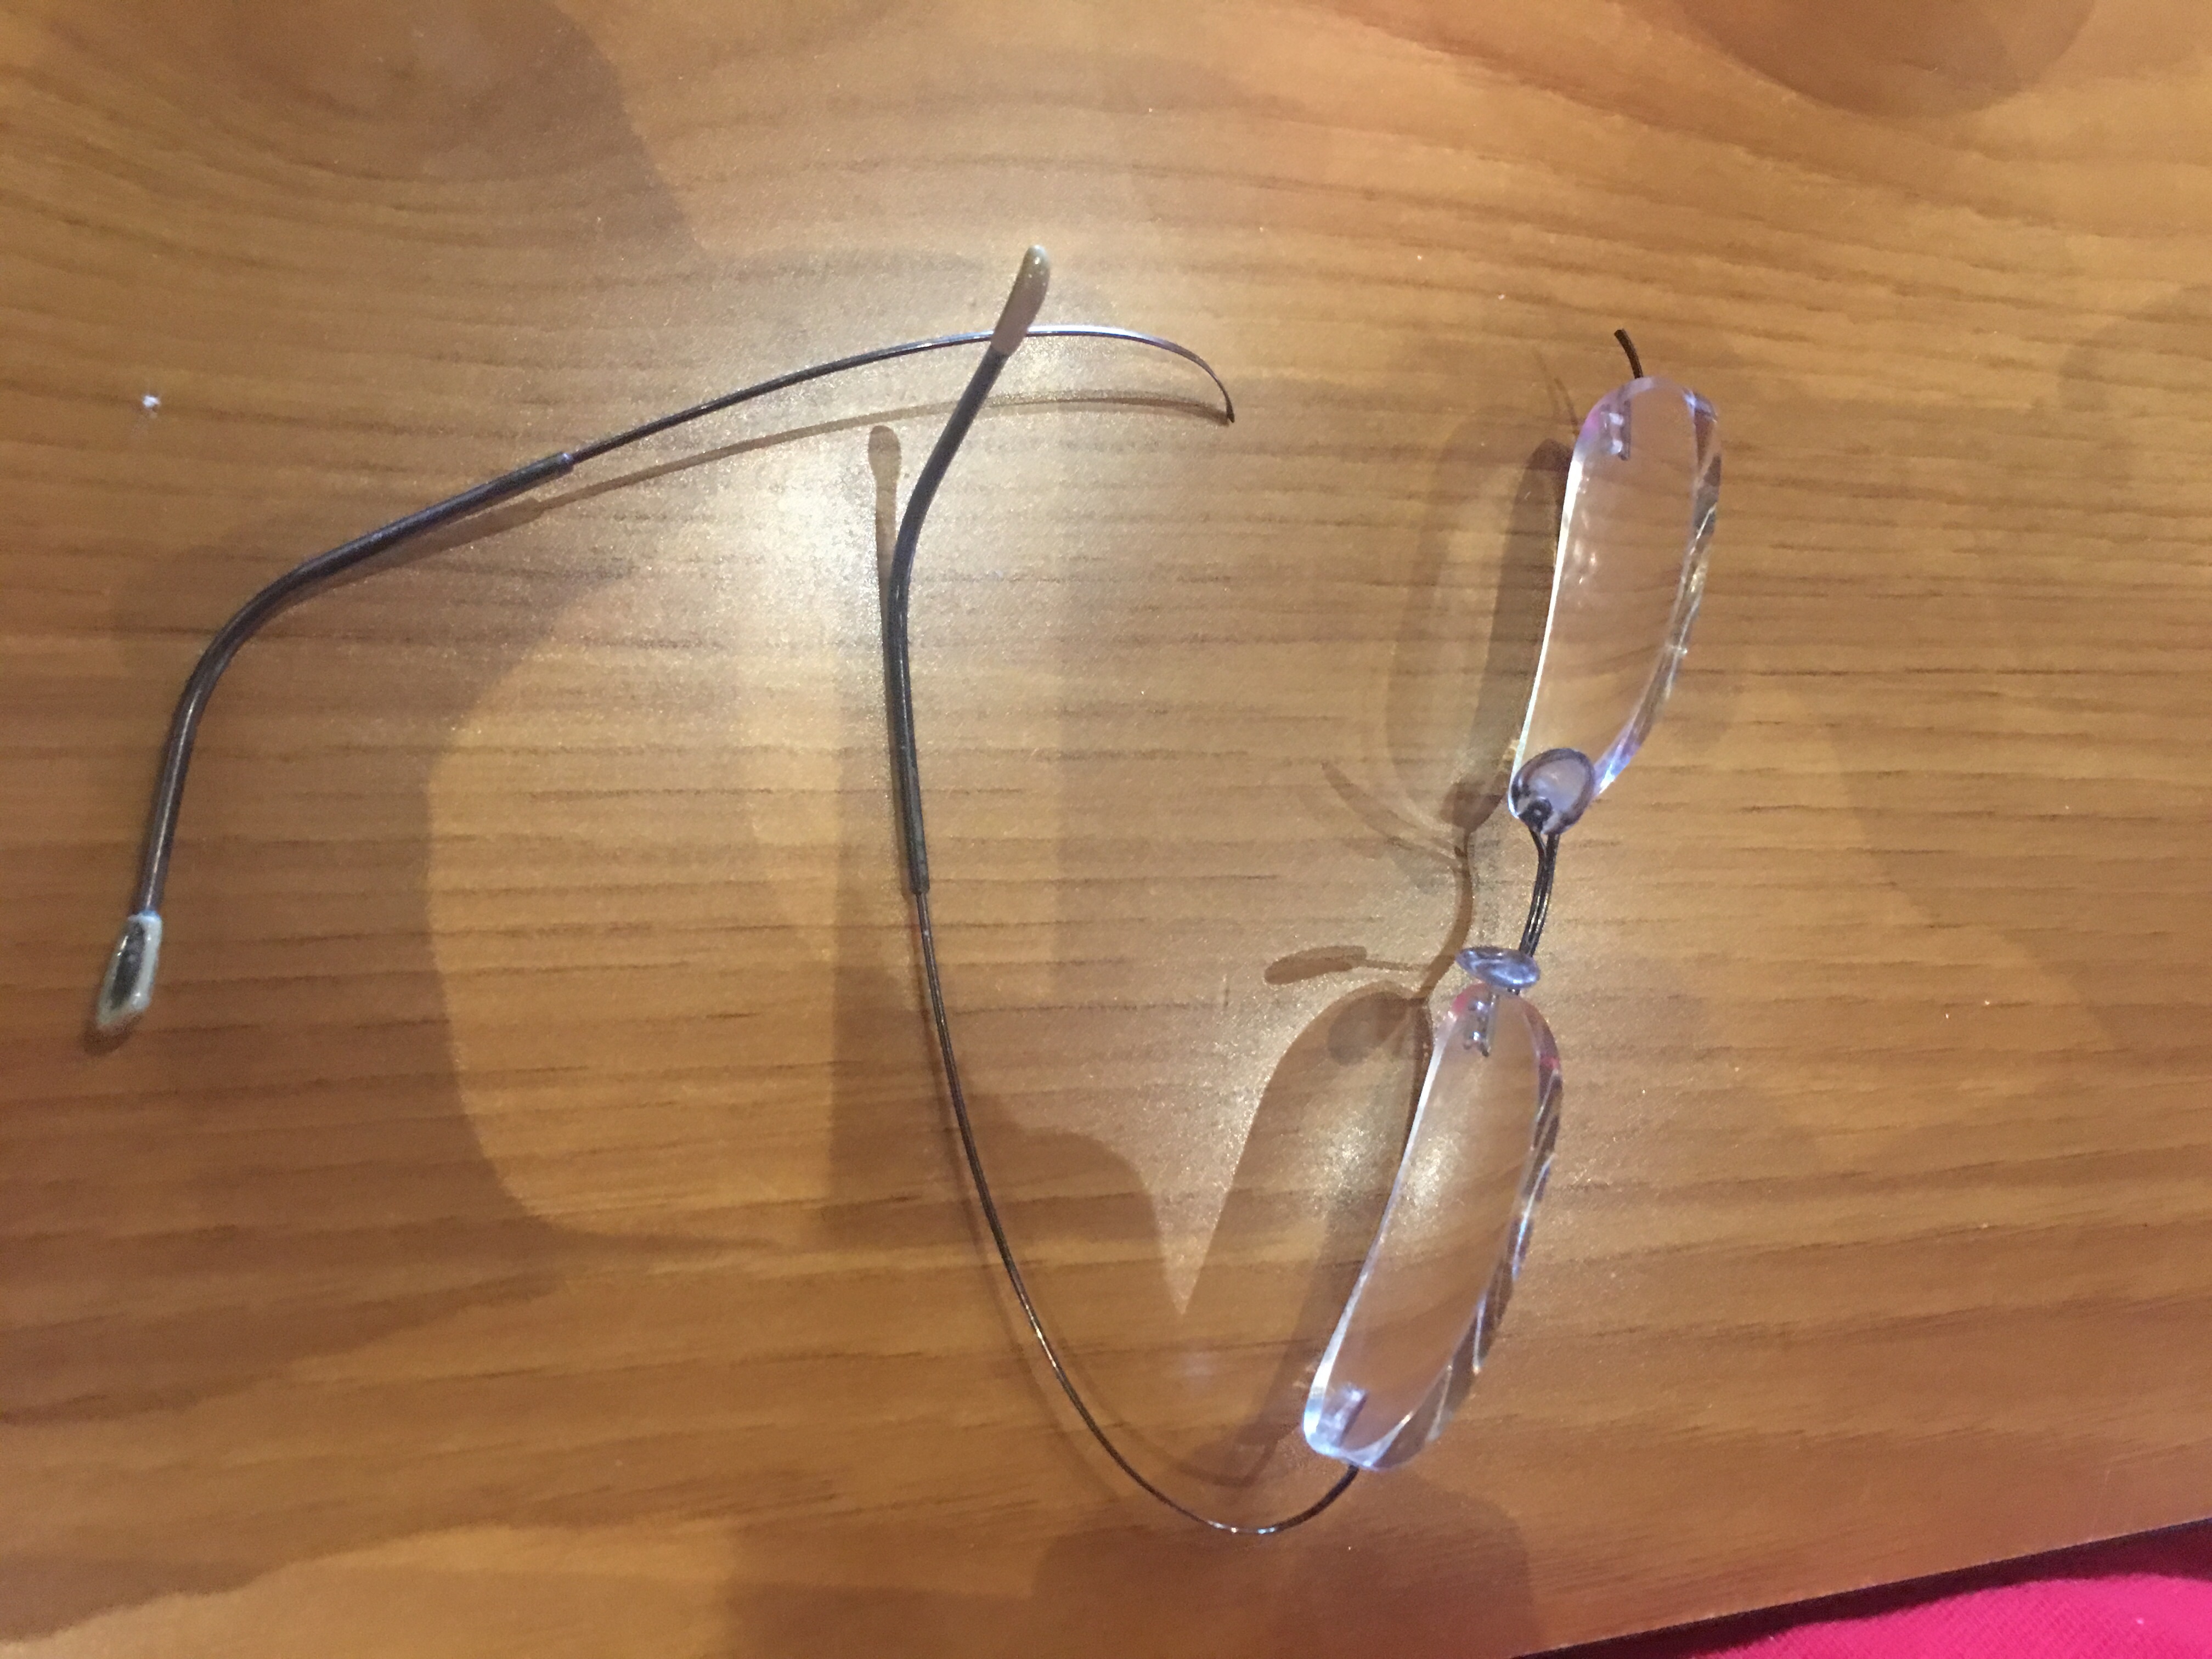 My "guaranteed unbreakable" eye glasses that broke. 